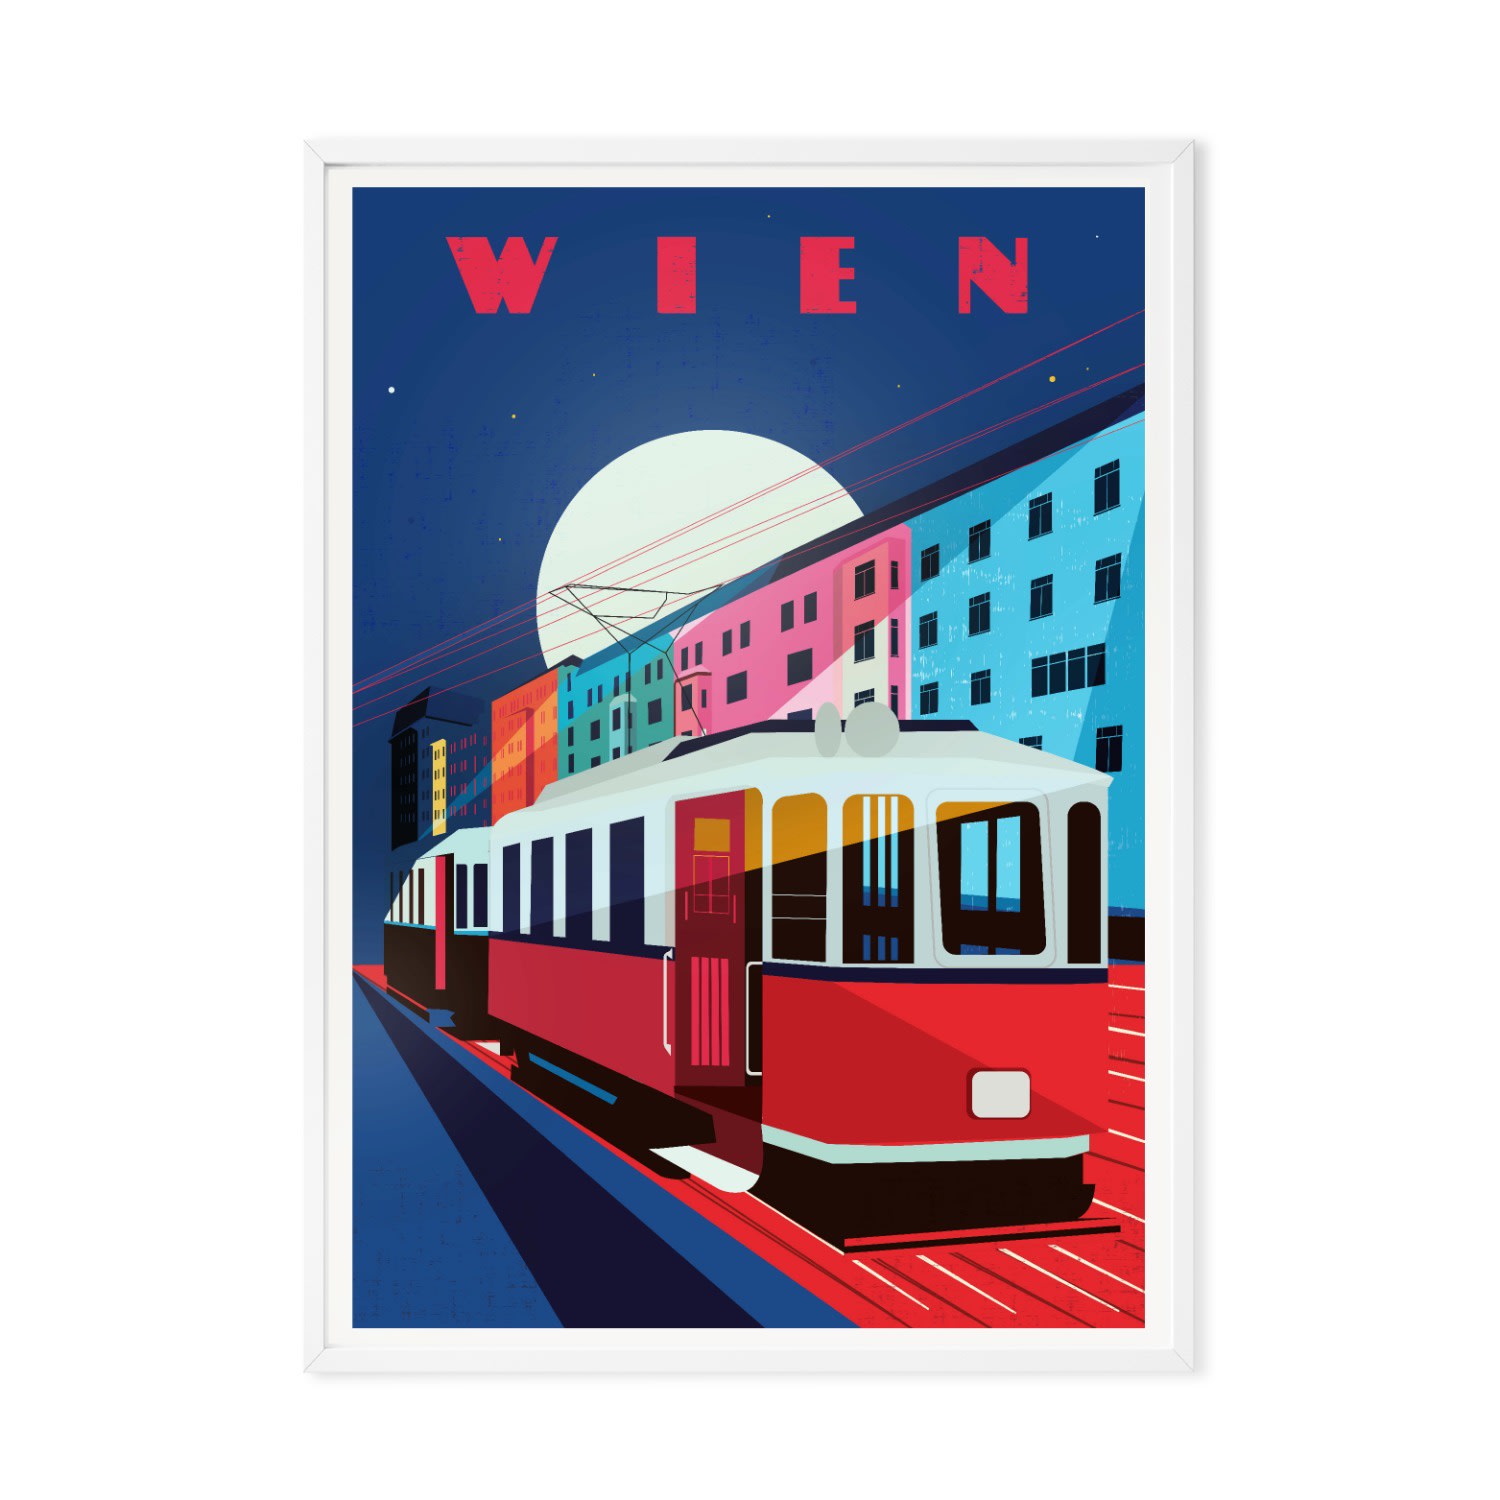 Wien Vienna Illustrated Art Print A3 297 X 420Mm Eye for London Prints